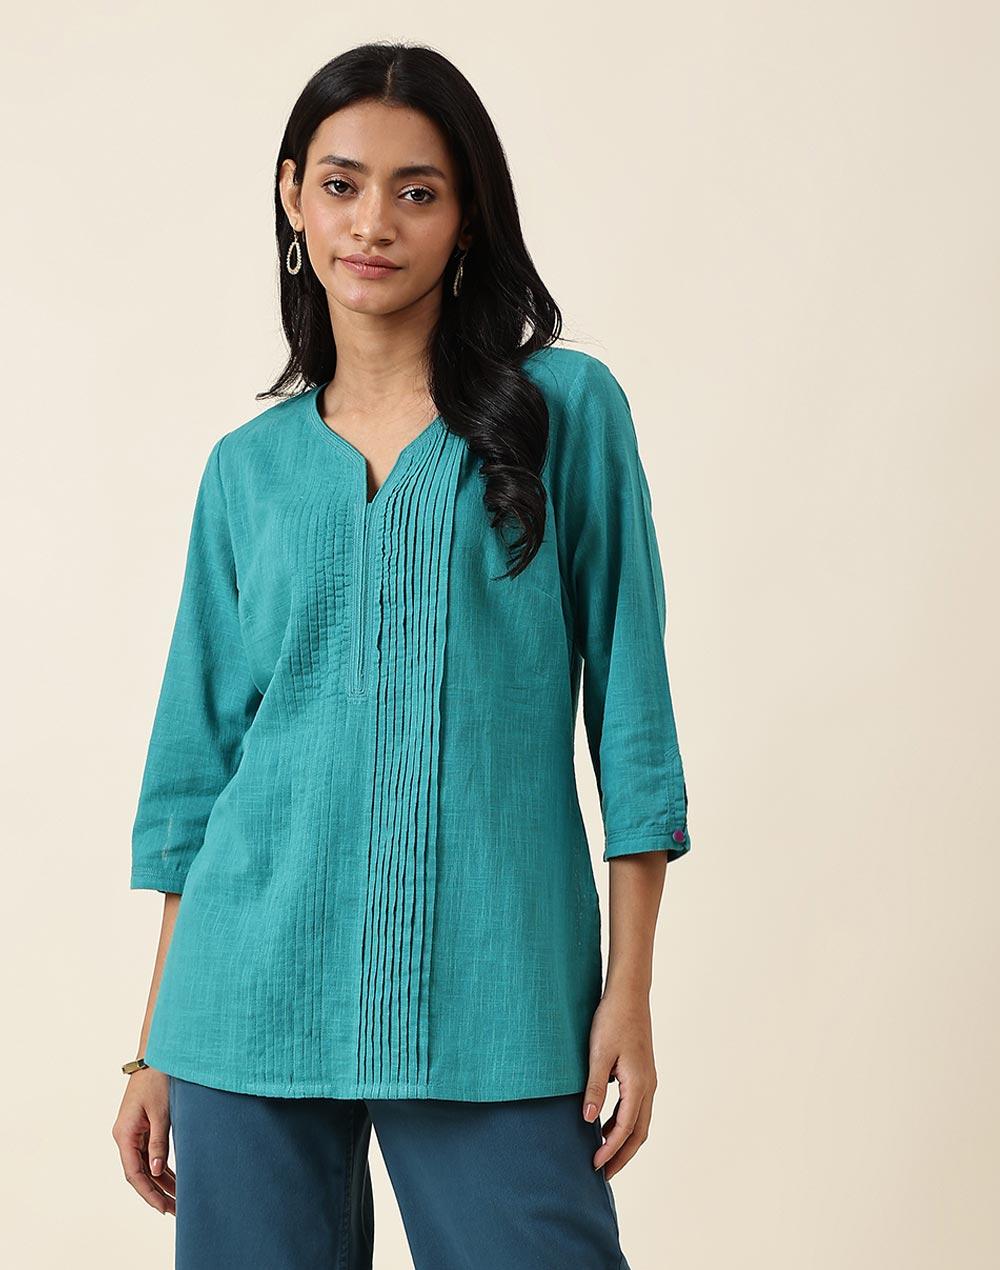 nuindian turquoise cotton slim fit short kurta